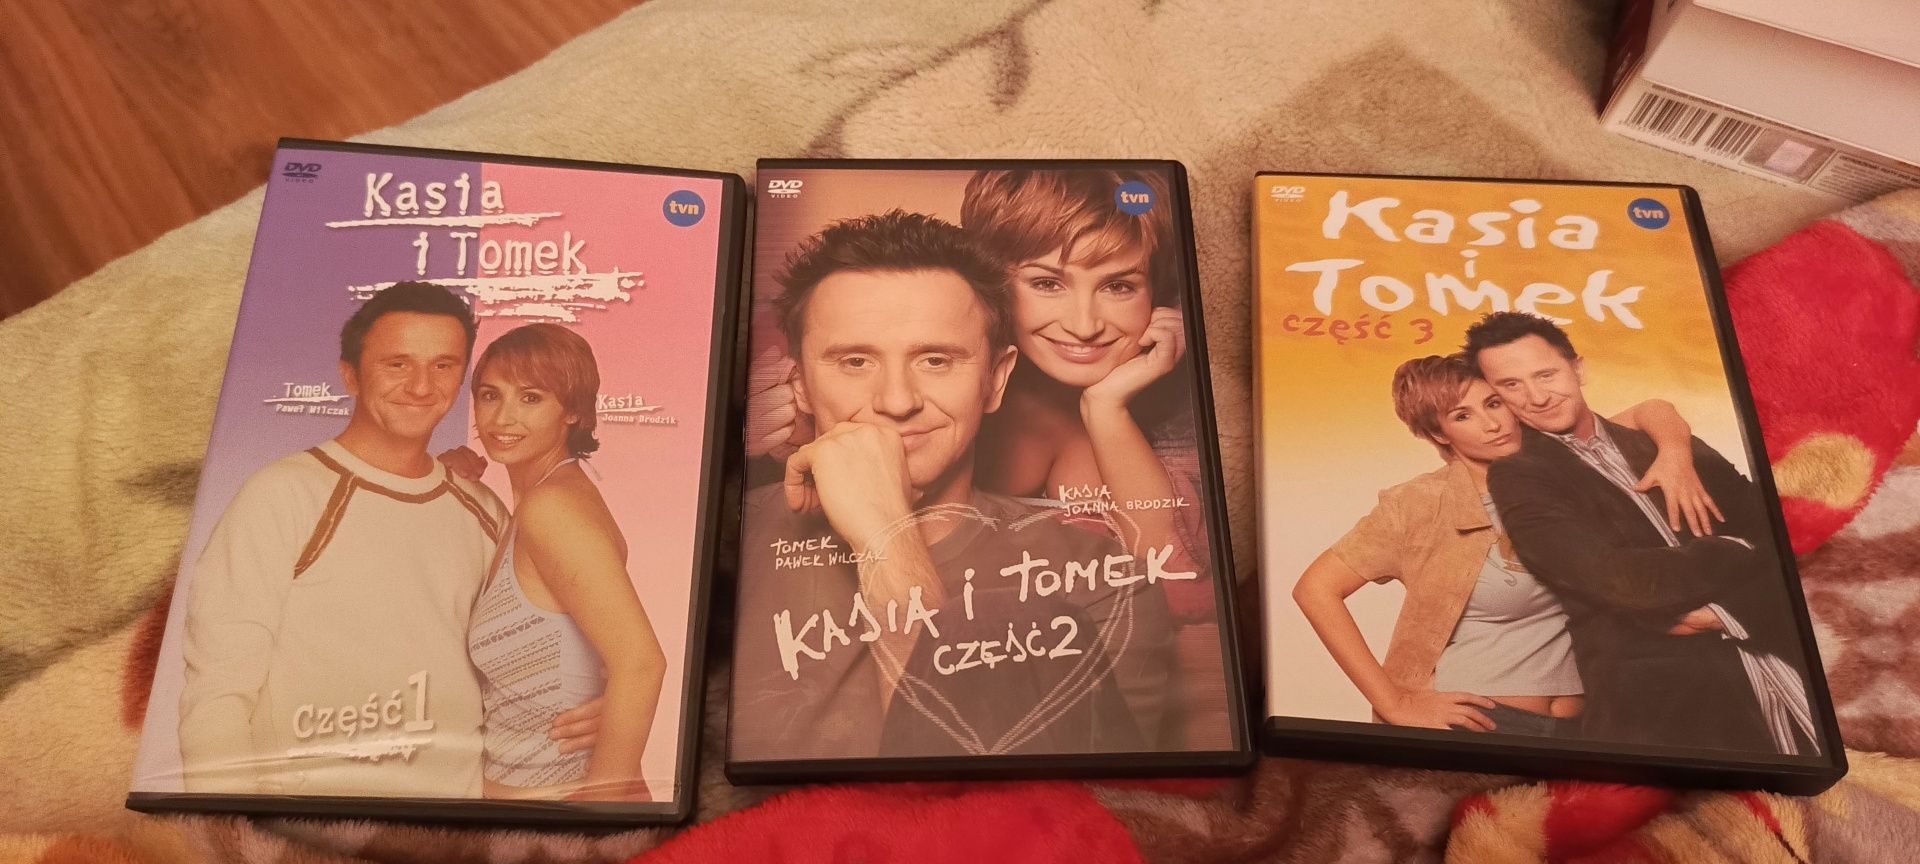 Kasia i Tomek zestaw 3 sezonów DVD